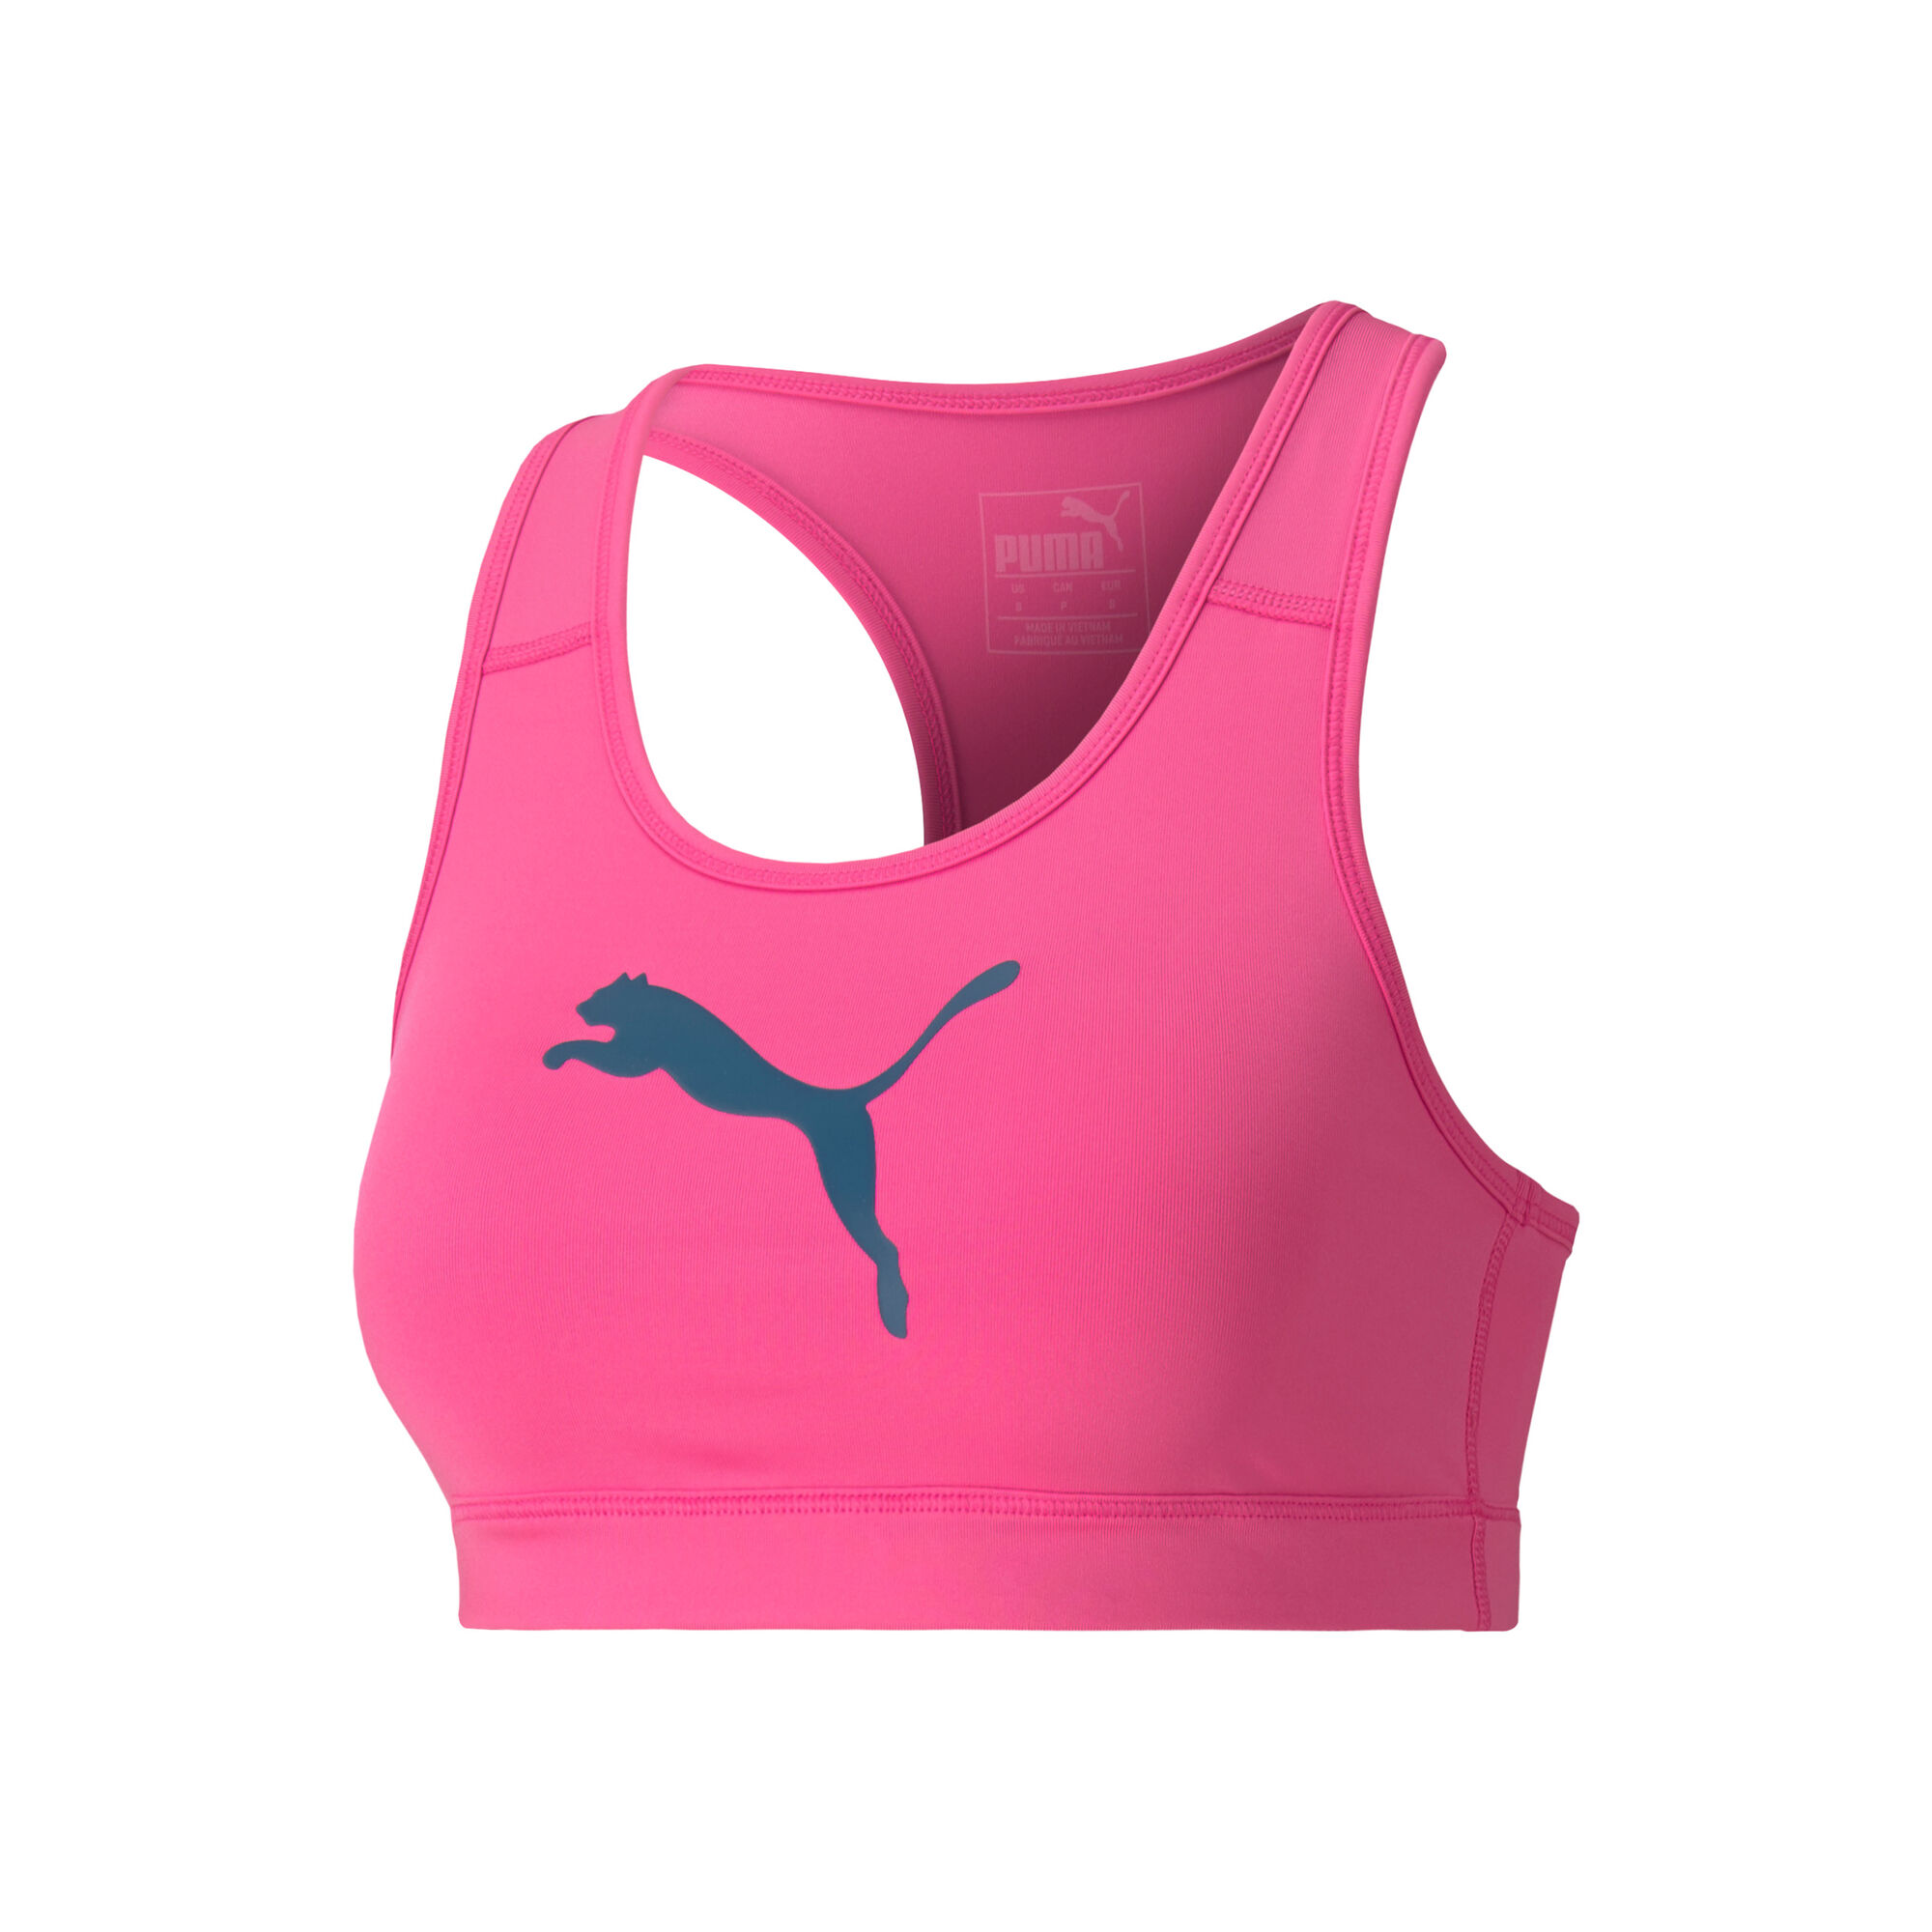 Piping Classroom chance buy Puma 4Keeps Sports Bras Women - Pink, Black online | Tennis-Point